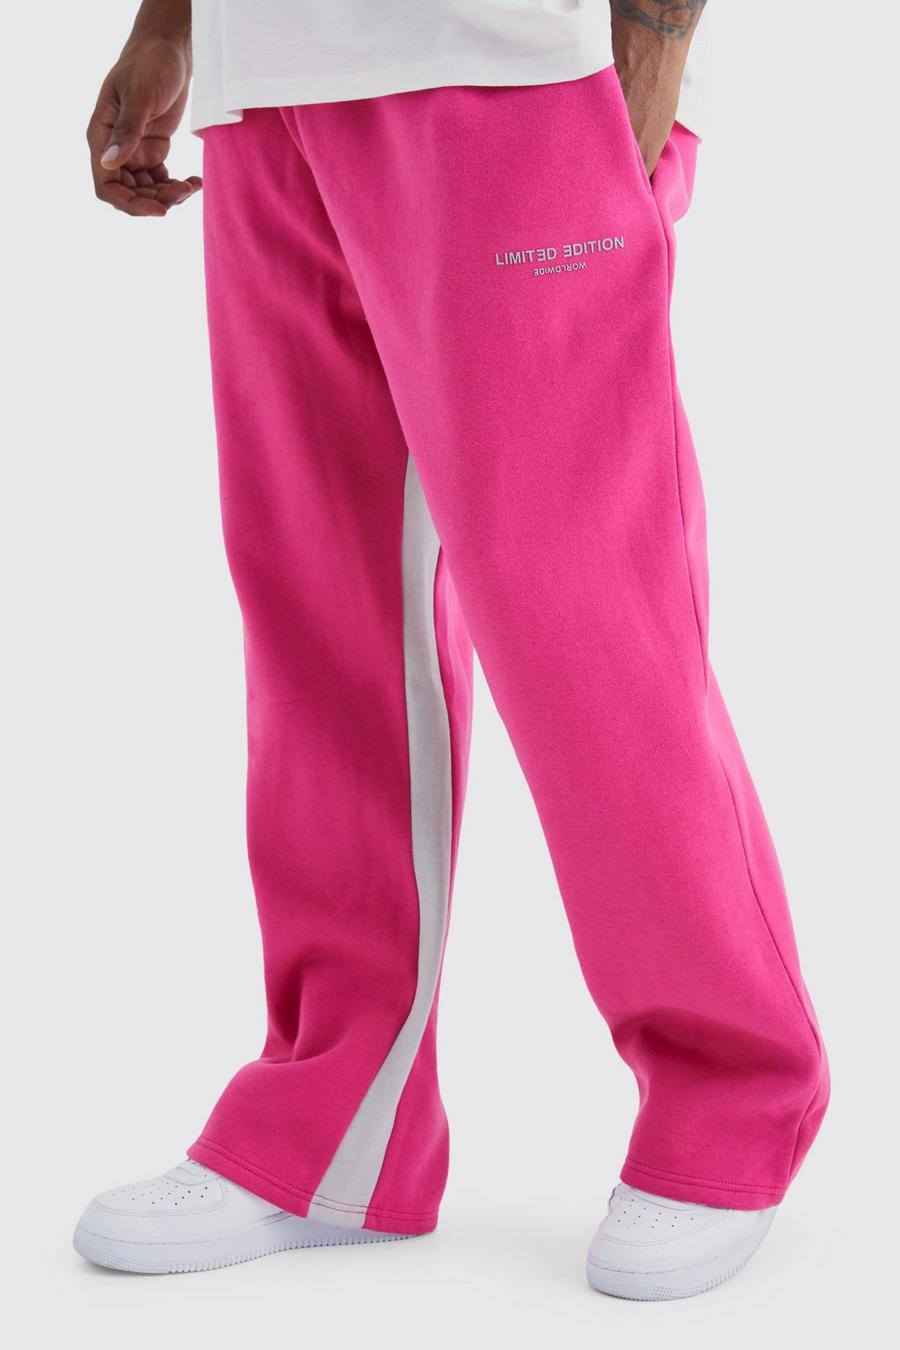 Pantalón deportivo Plus Regular con refuerzo Limited, Bright pink